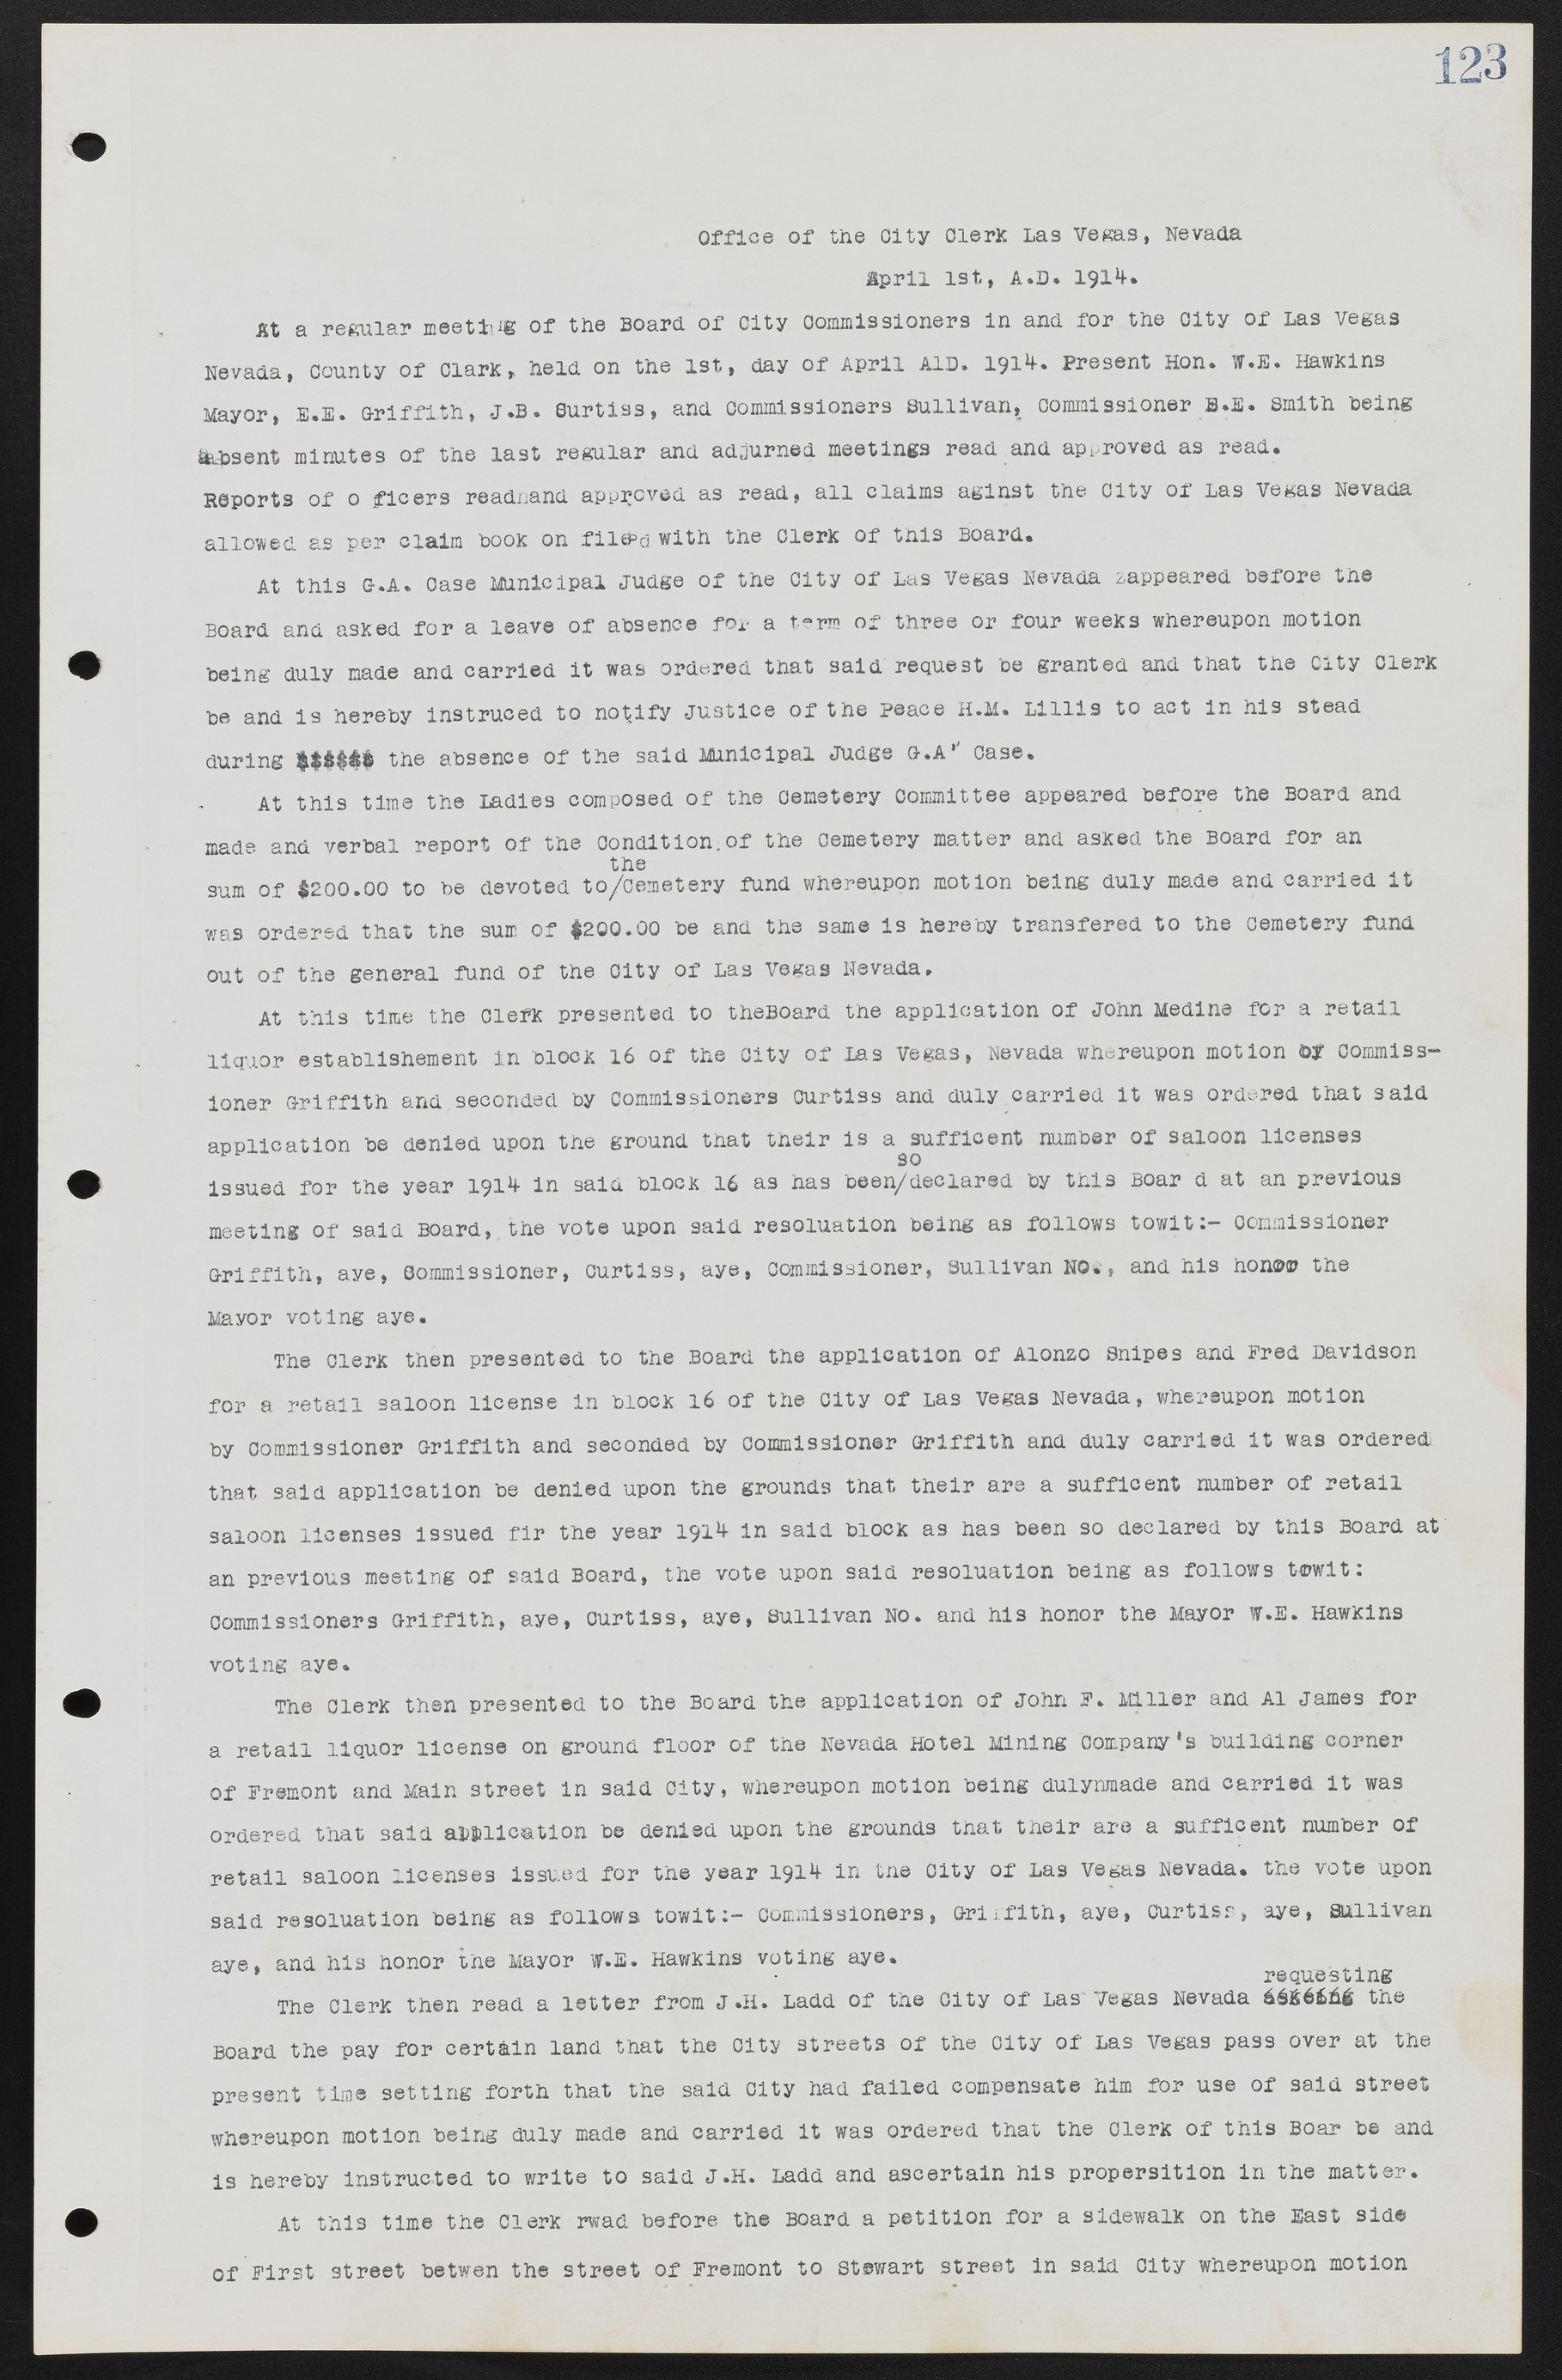 Las Vegas City Commission Minutes, June 22, 1911 to February 7, 1922, lvc000001-137